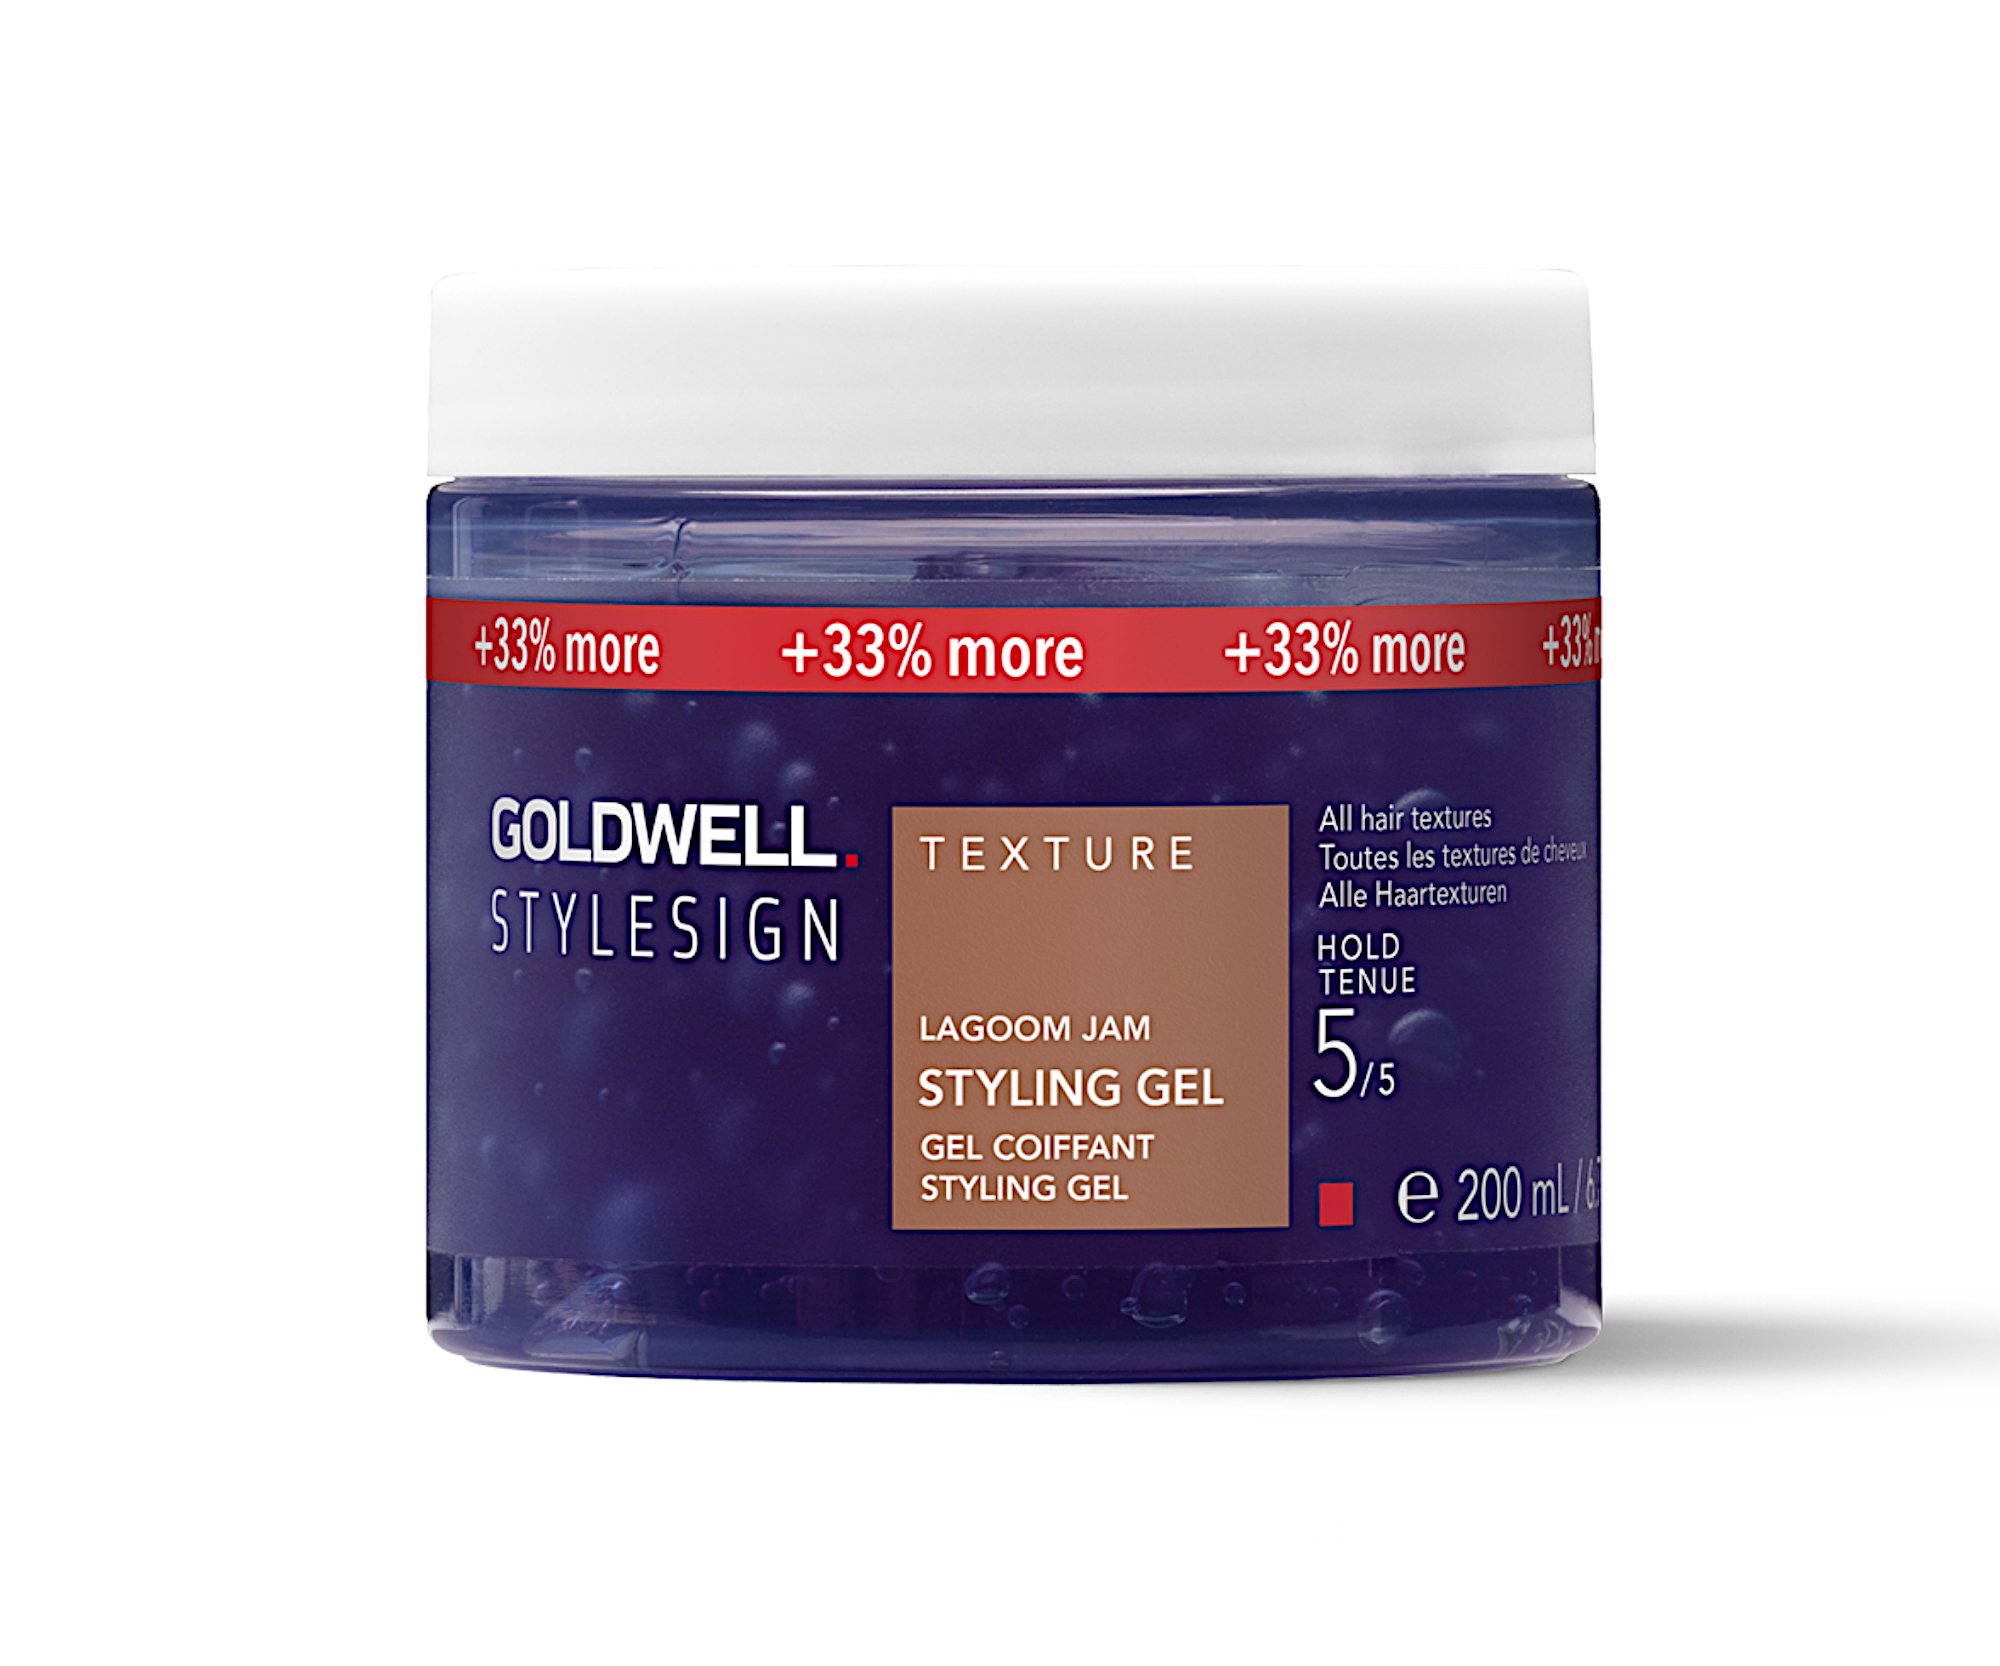 Stylingový gel na vlasy s velmi silnou fixací Goldwell Stylesign Texture Lagoom Jam - 200 ml + dárek zdarma